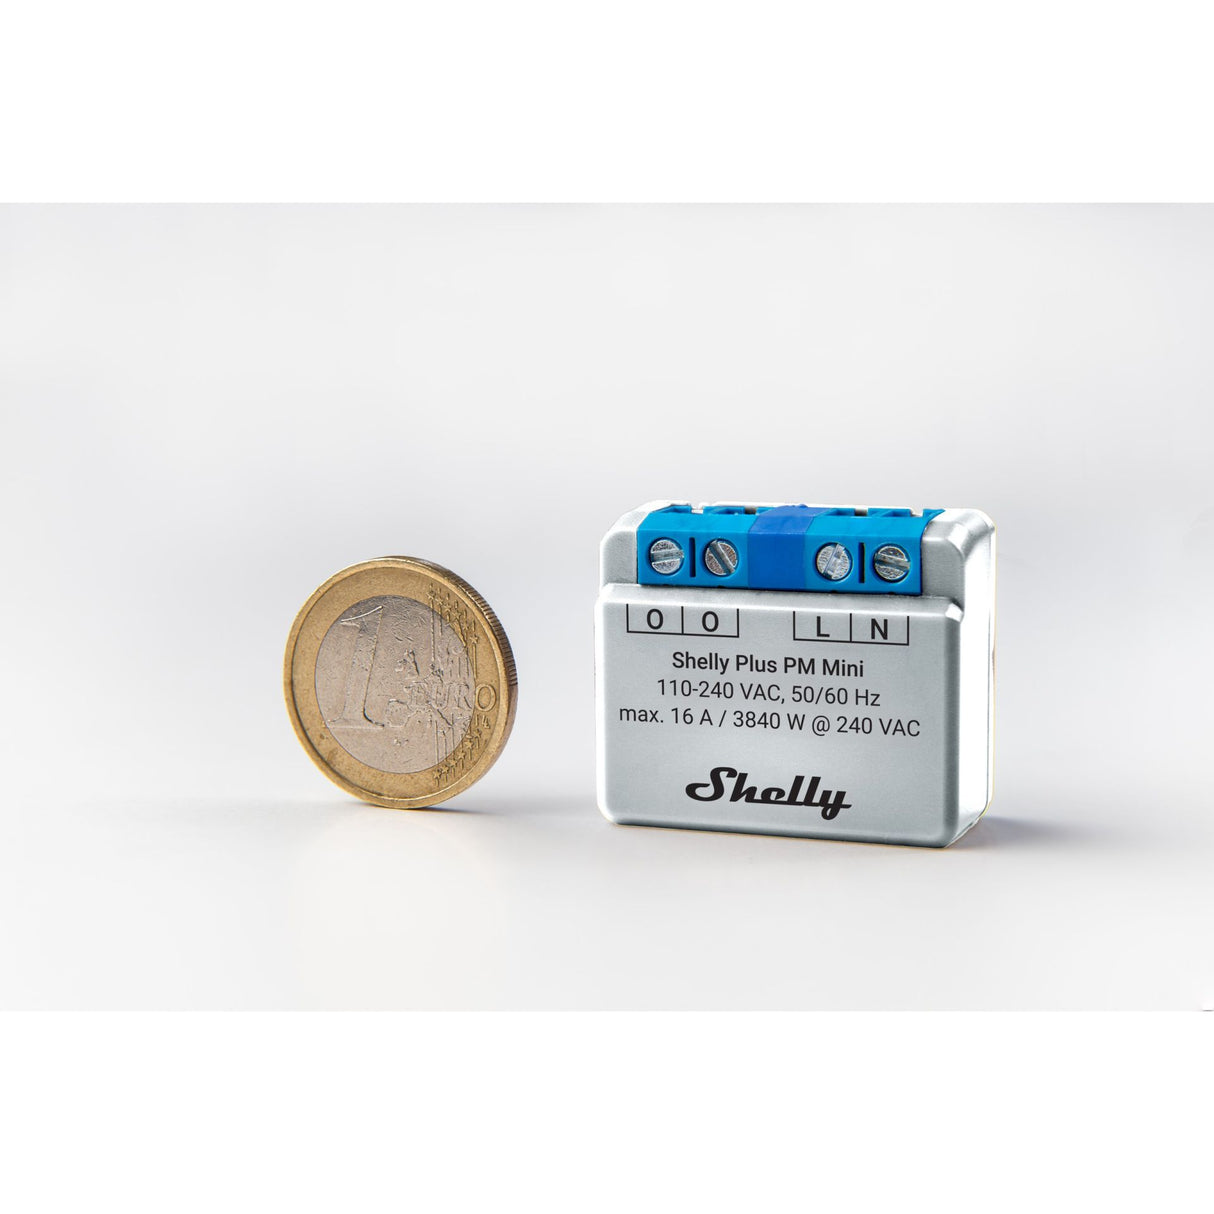 Shelly Plus PM Mini - Leistungsmesser - WLAN & Bluetooth - Smart Home - Kompatibel mit amazon Alexa & Google Home